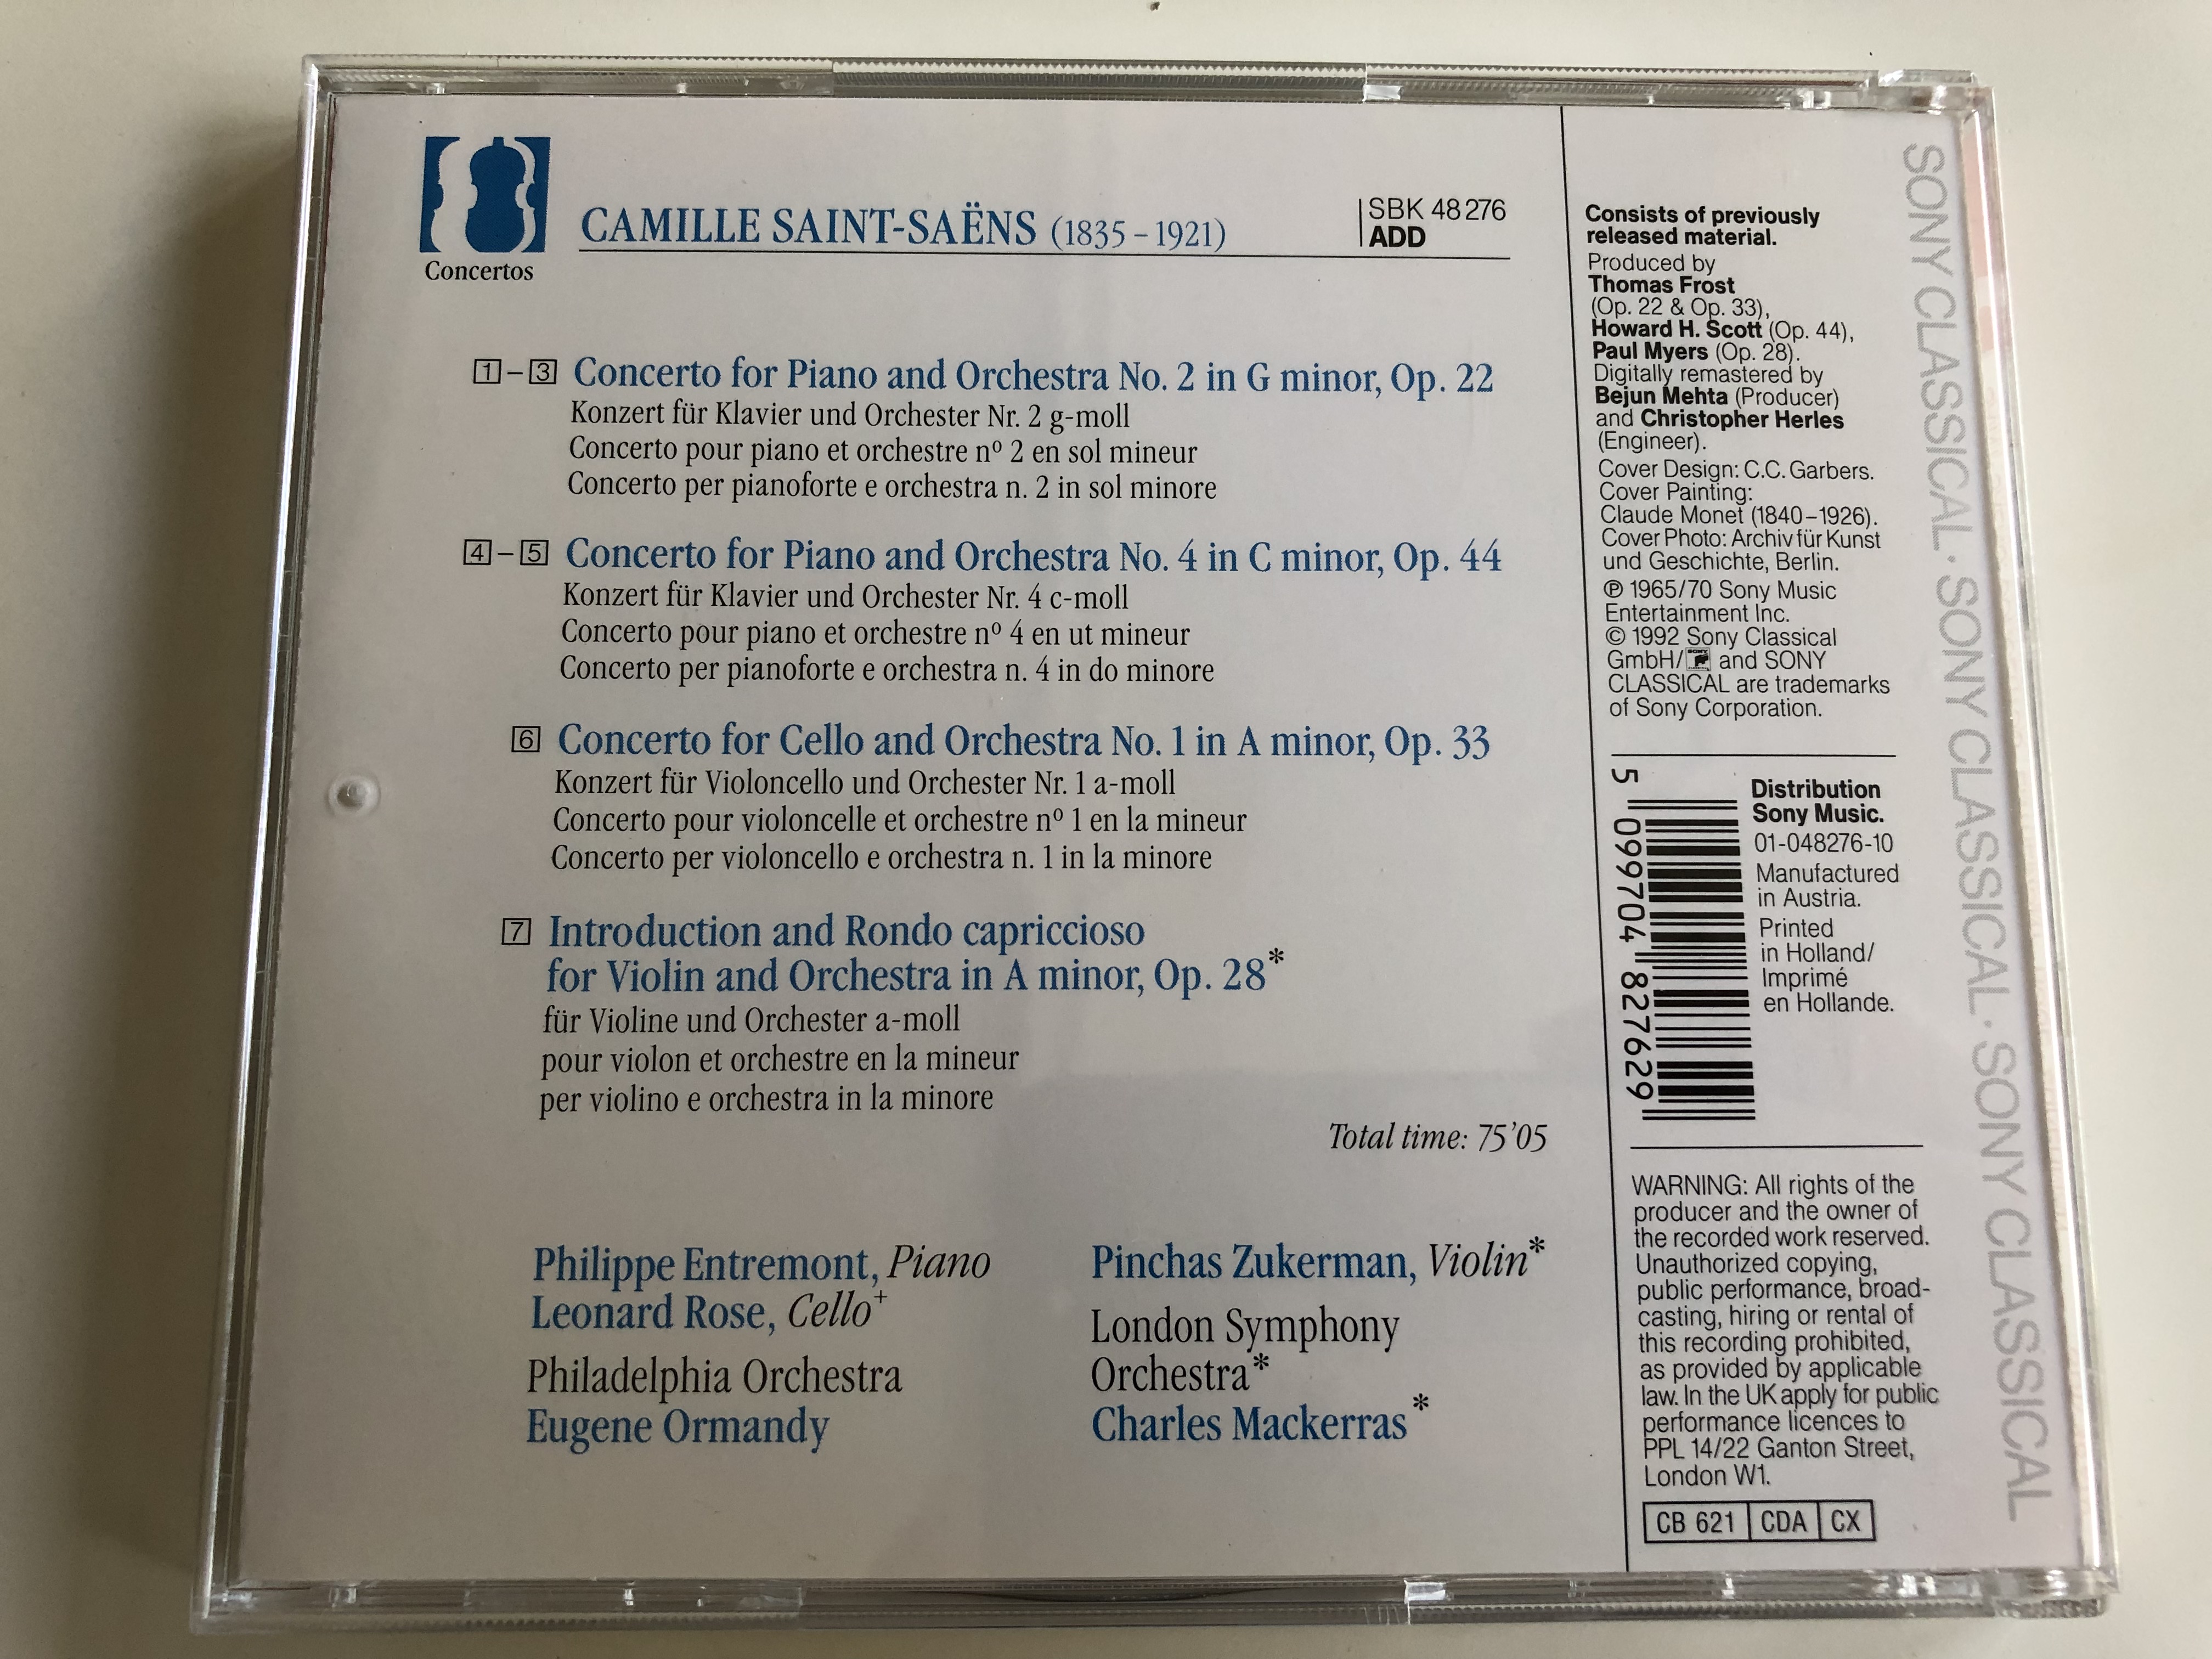 saint-saens-piano-concertos-no.-2-no.-4-cello-concerto-no.1-philippe-entremont-leonard-rose-philadelphia-orchestra-conducted-by-eugene-ormandy-audio-cd-1992-essential-classics-6-.jpg